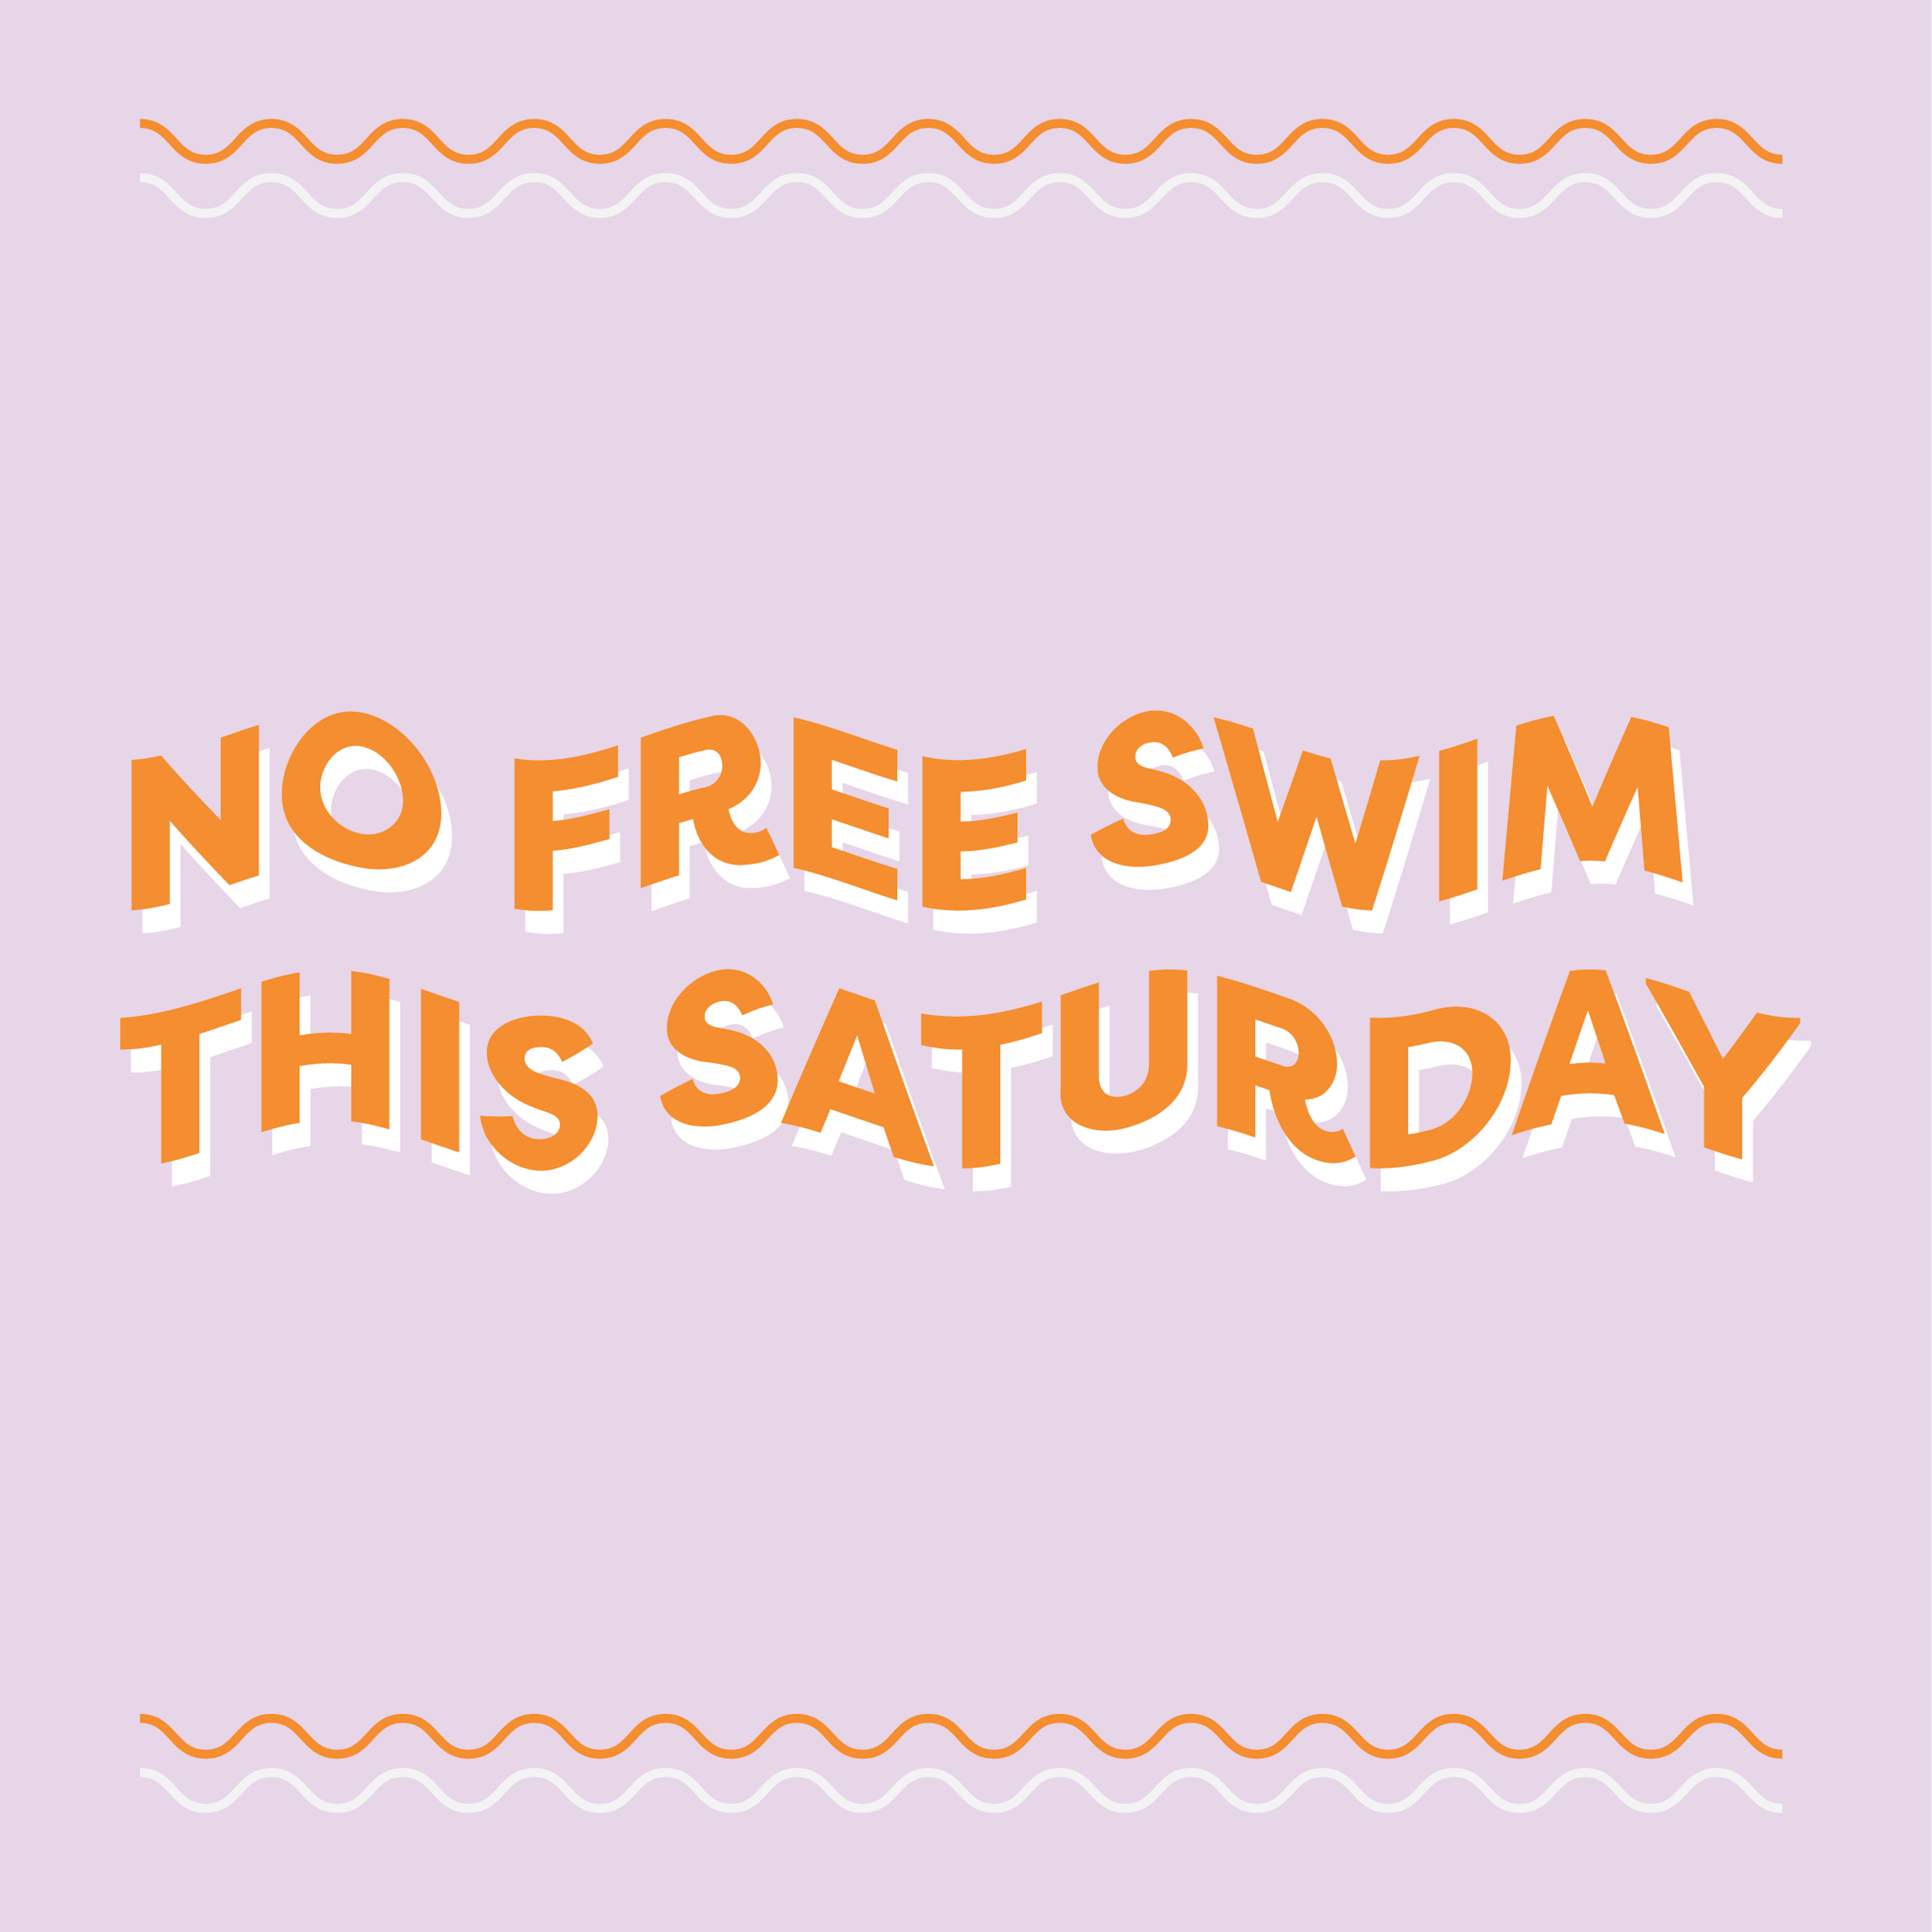 pink background, orange text reads "NO FREE SWIM THIS SATURDAY"